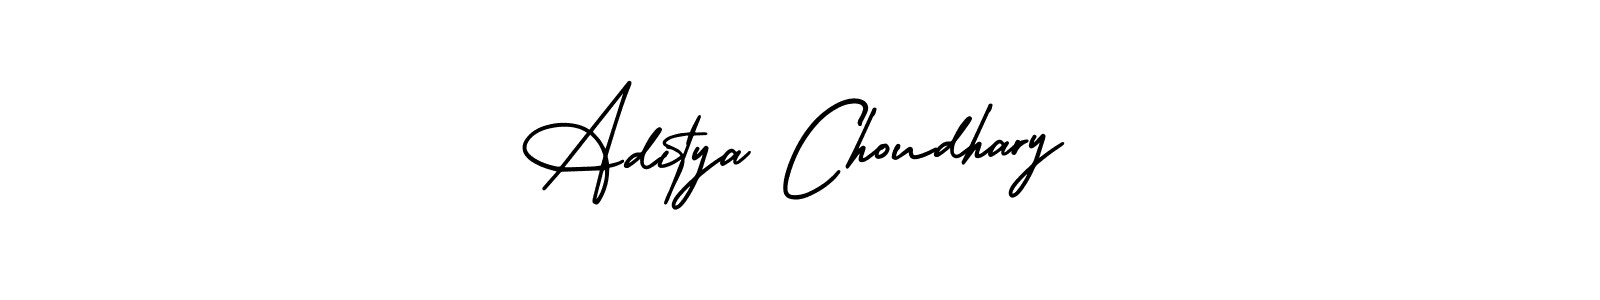 87+ Aditya Choudhary Name Signature Style Ideas | Fine eSign